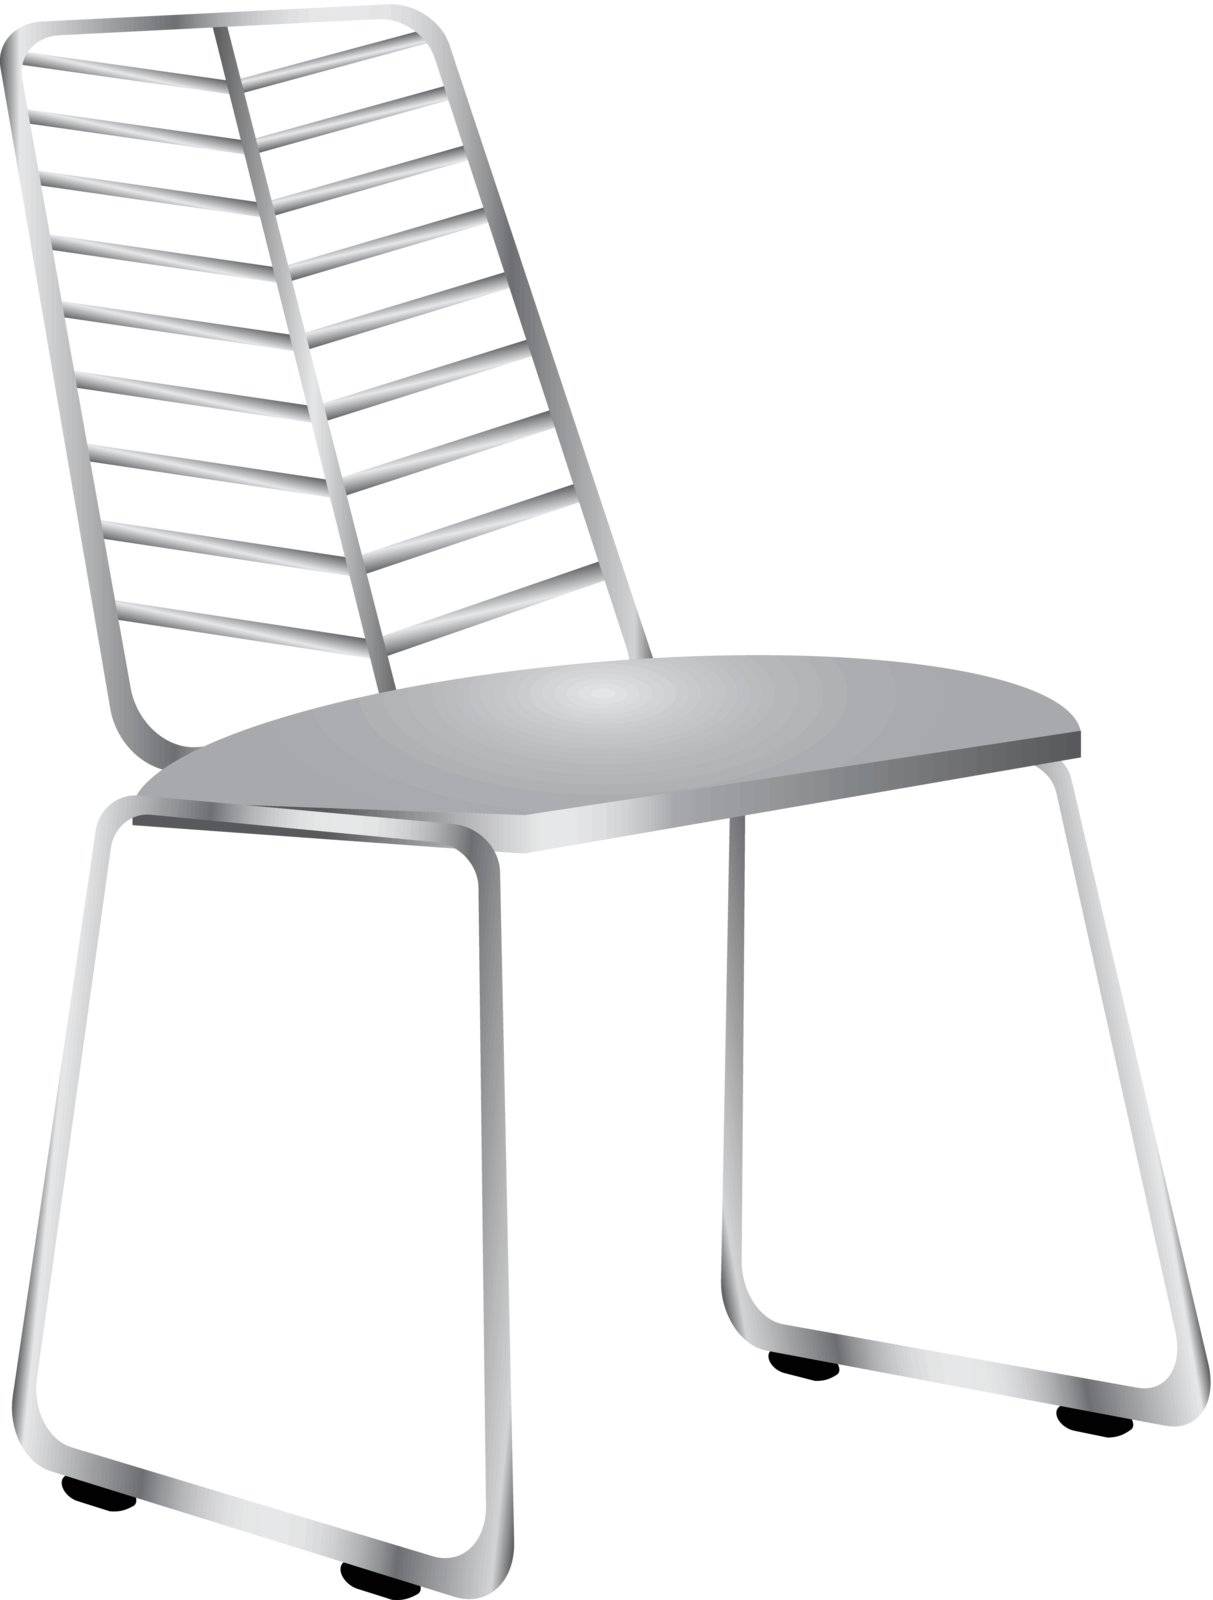 Designer chair by VIPDesignUSA